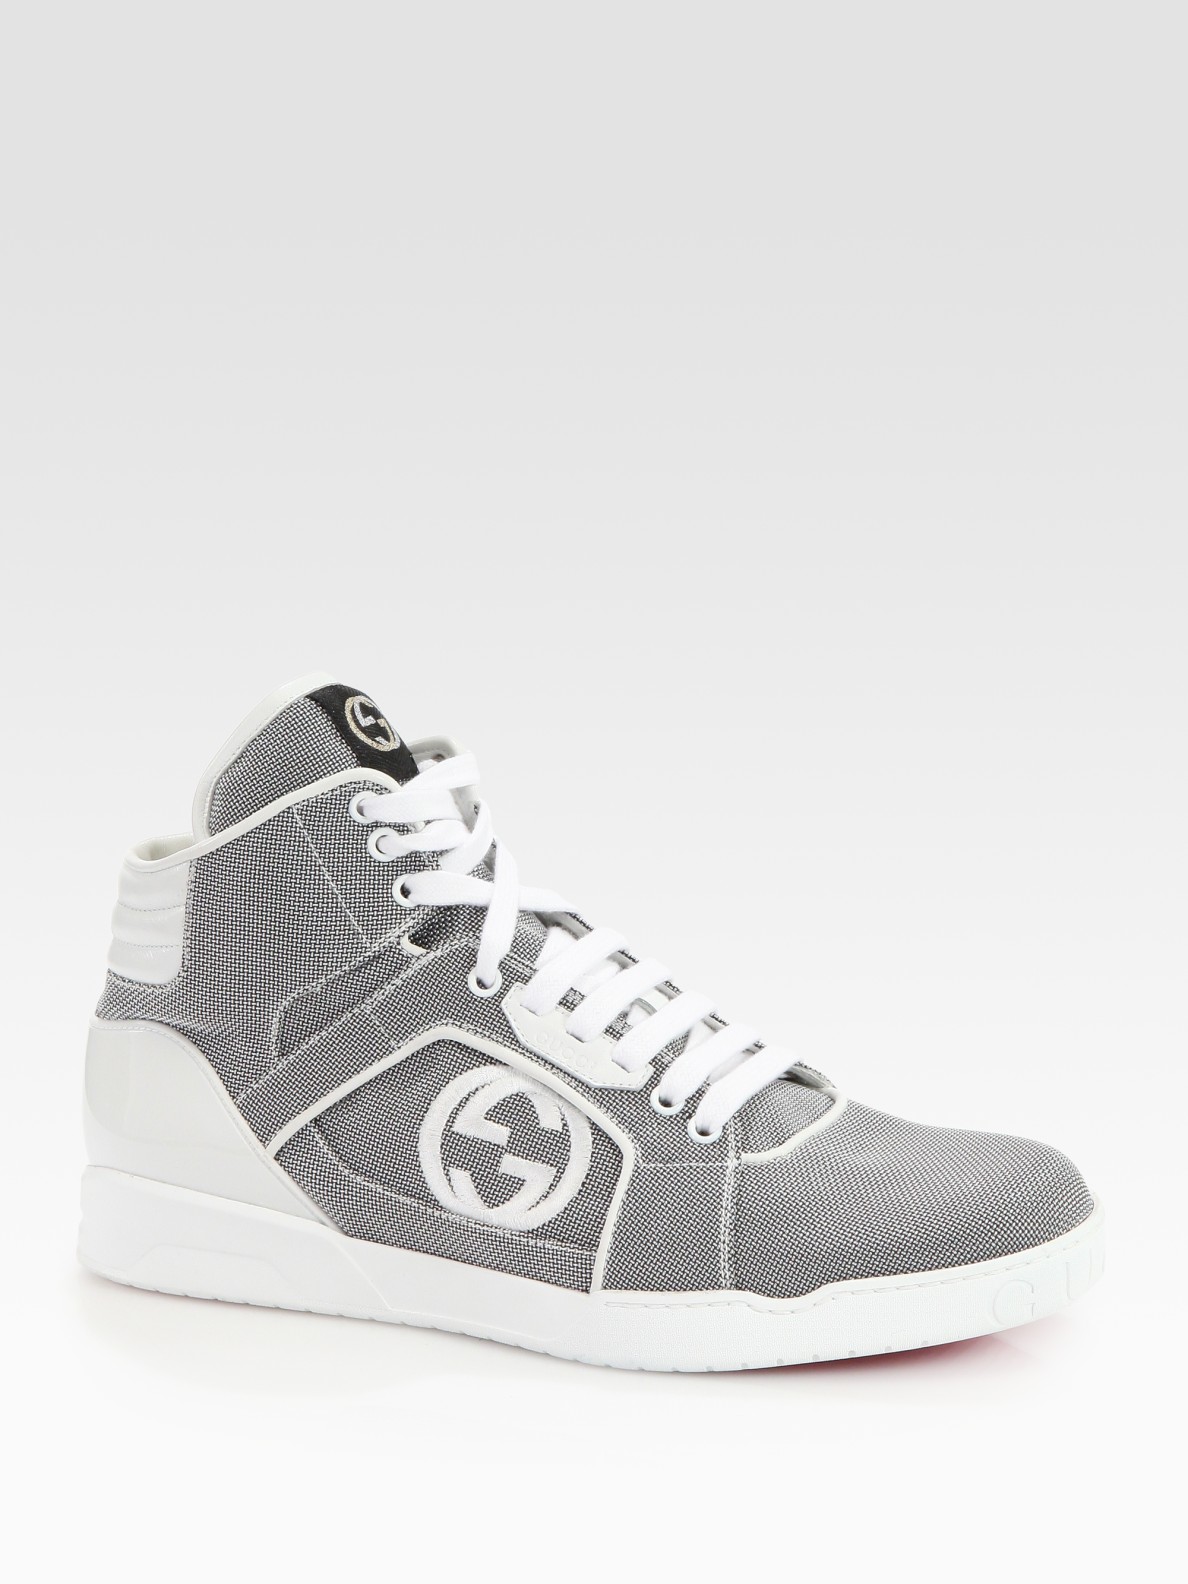 grey high top sneakers